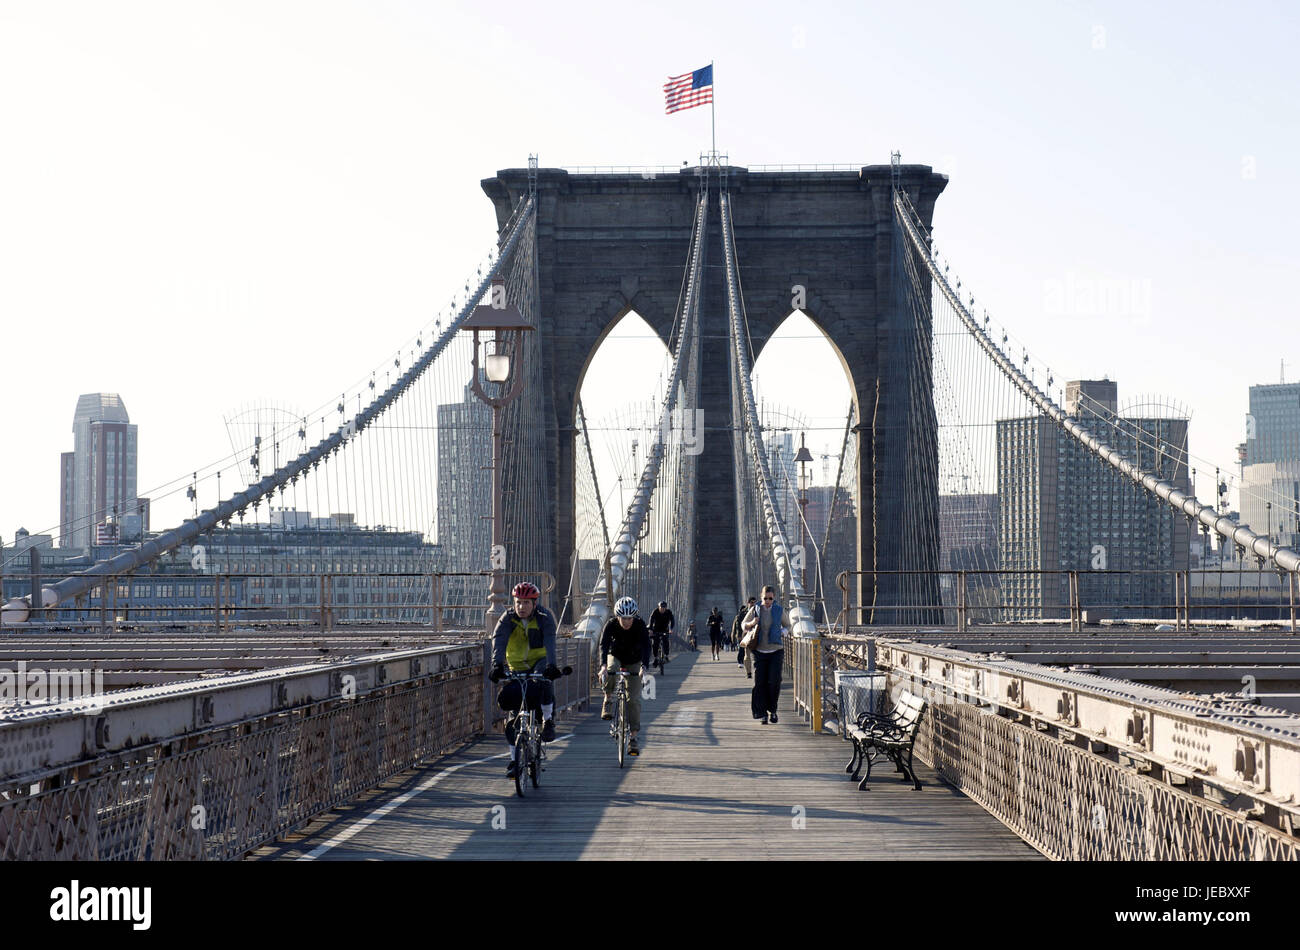 The USA, America, New York, Manhattan, cyclist and pedestrian on Brooklyn Bridge, Stock Photo